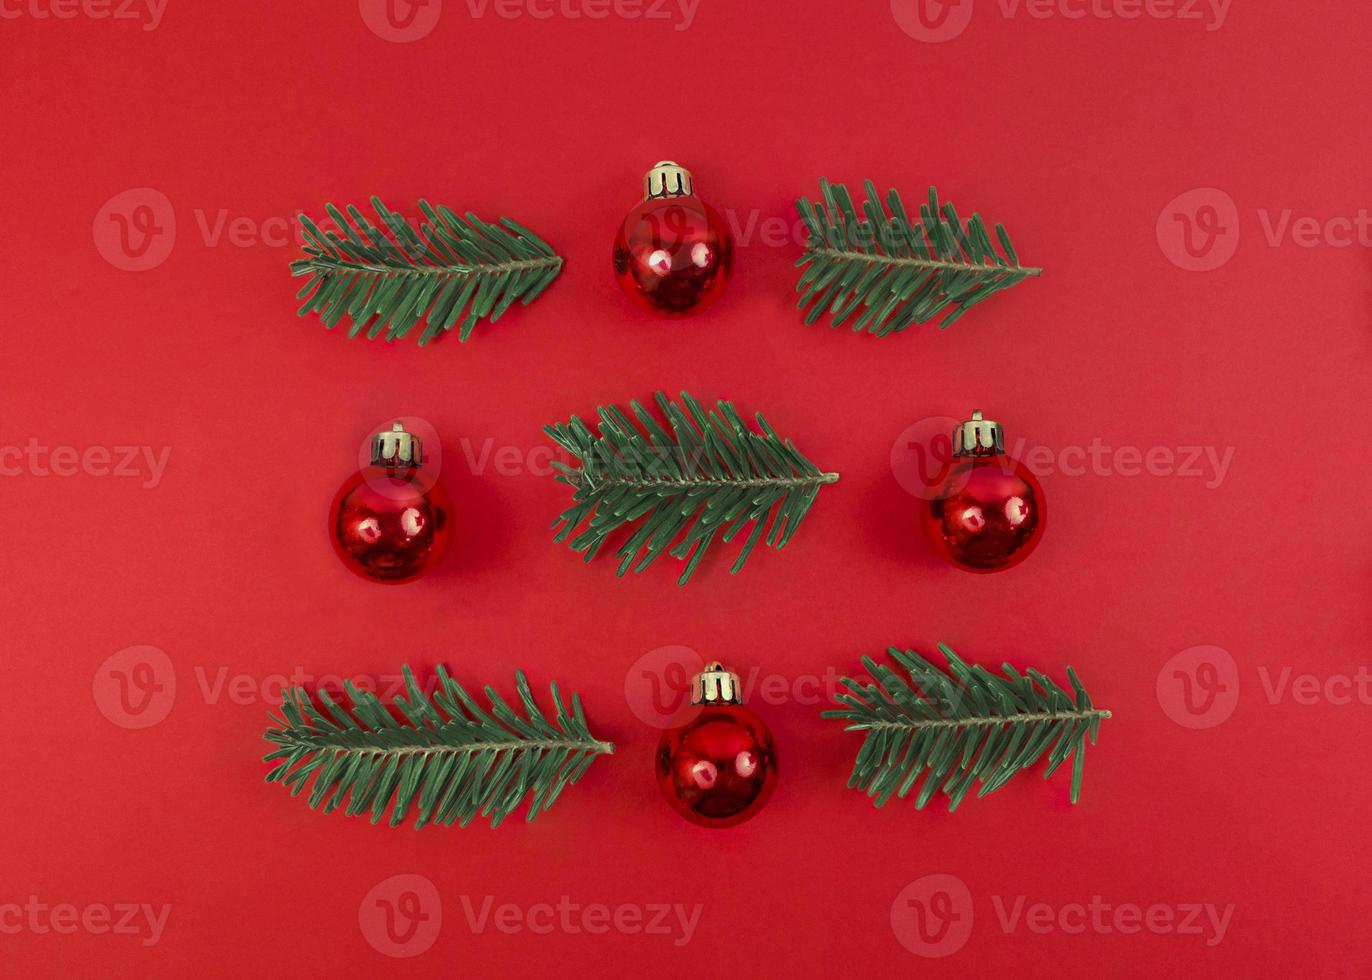 Composición de simetría navideña de adornos de juguete y ramas de abeto sobre un fondo rojo. plano festivo simple. foto